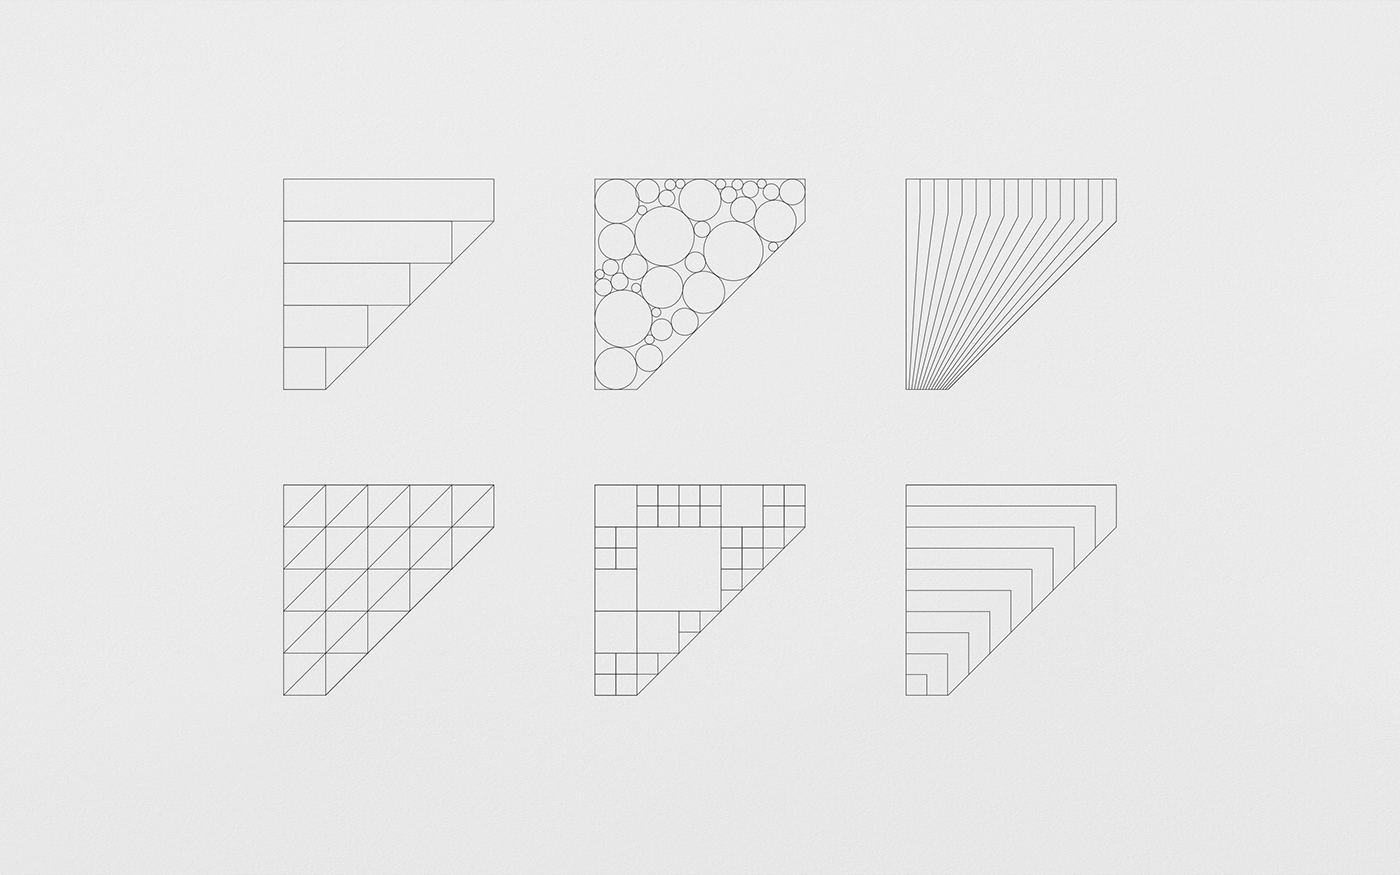 future logo concept idea tomorrow minimal typographic Retail business corporate